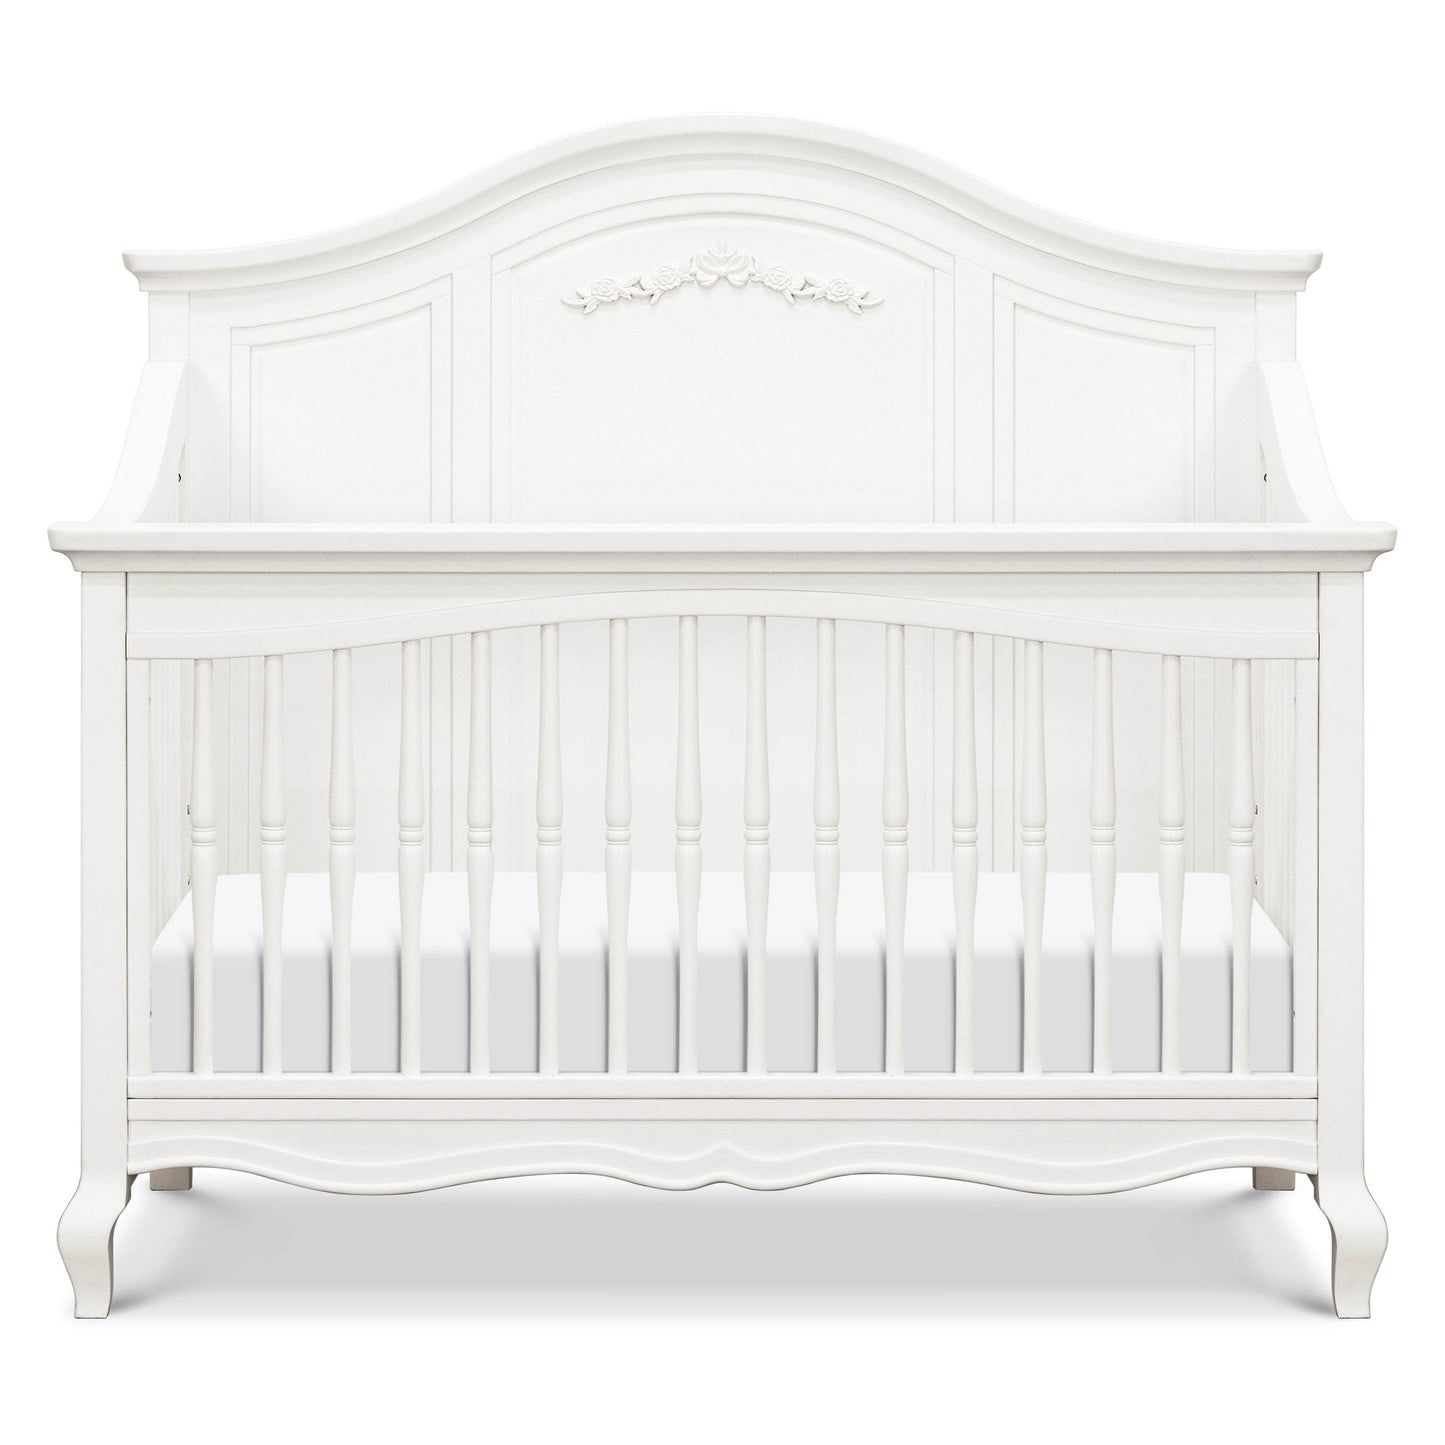 B19601RW,Mirabelle 4-in-1 Convertible Crib in Warm White